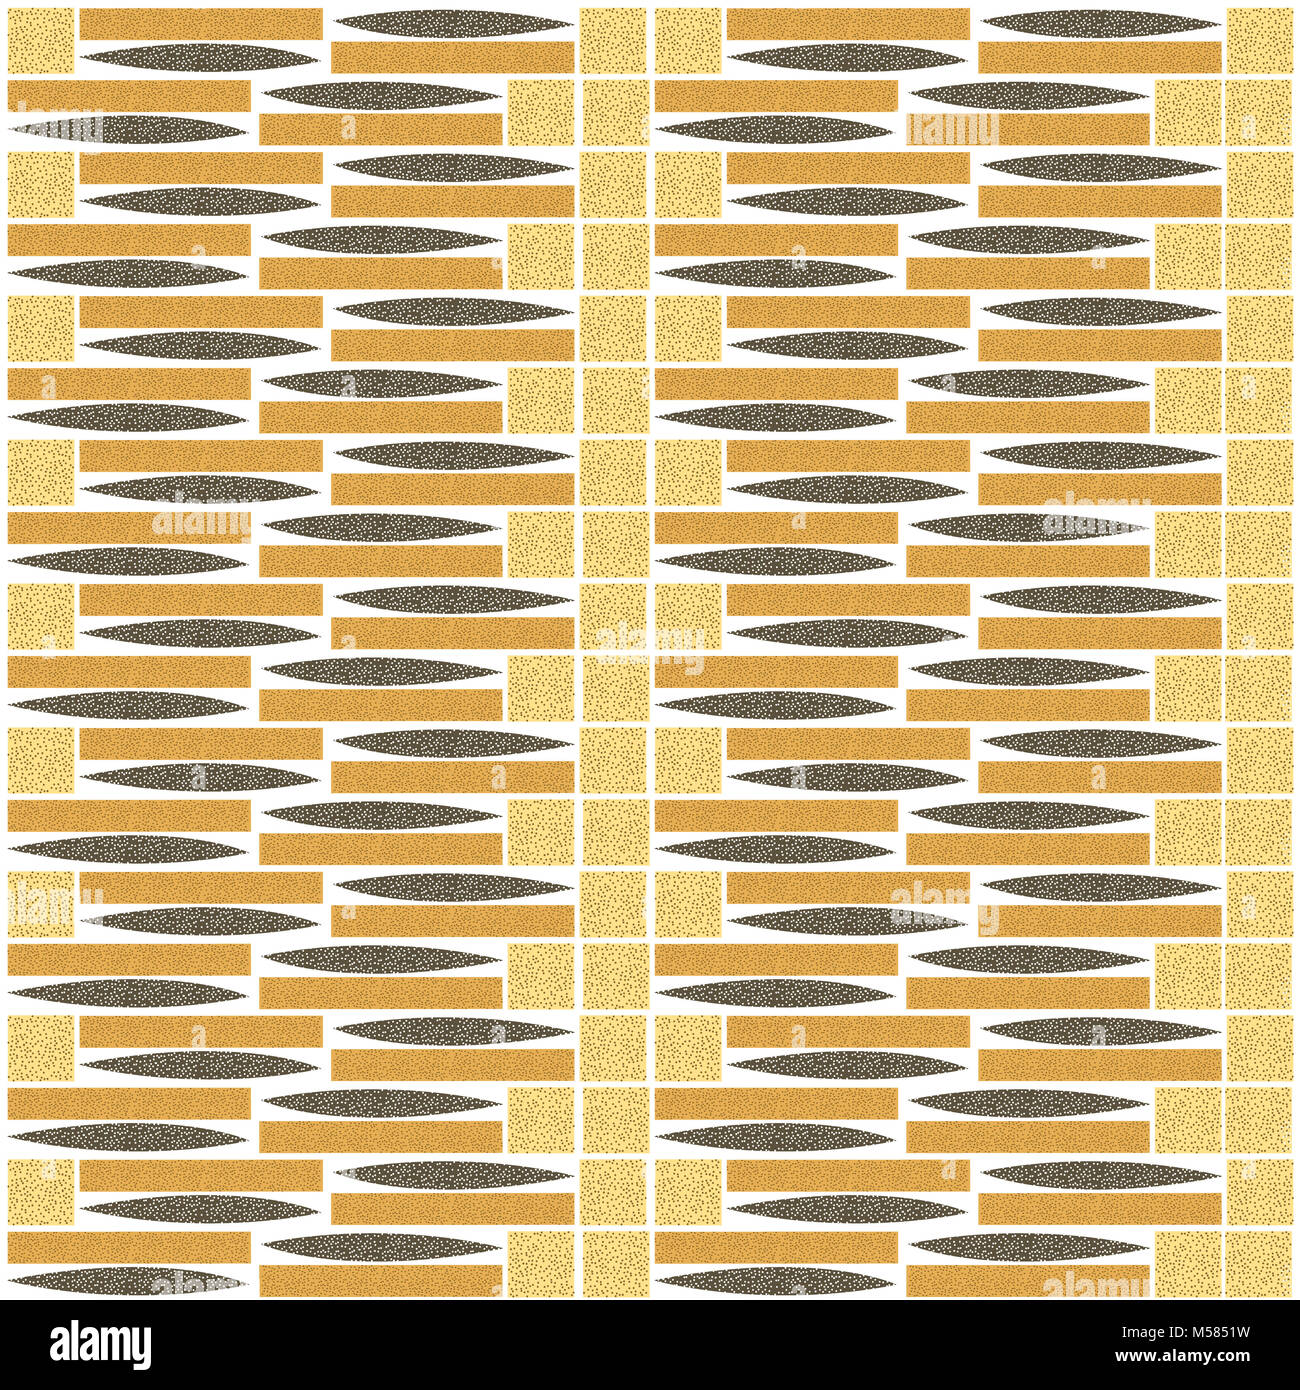 Gold mosaic pattern vector. Geometric background. Stock Photo